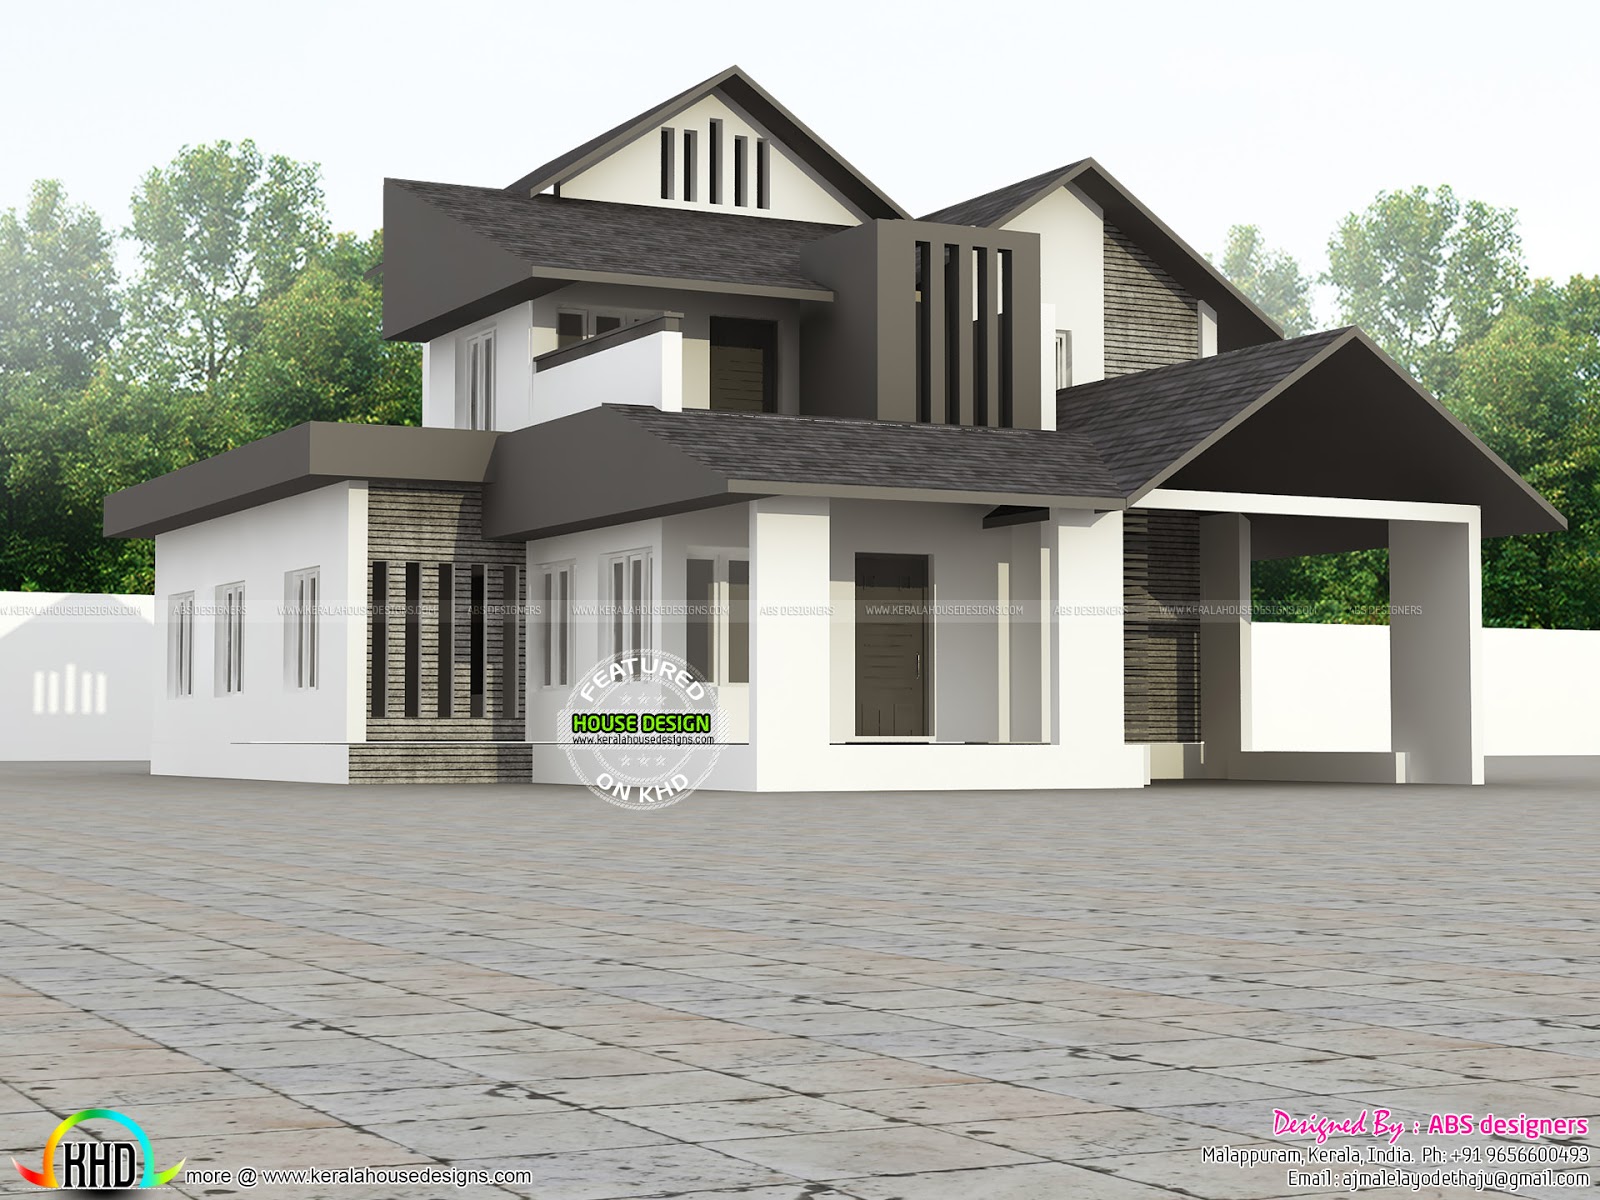  Contemporary  modern  2000  sq  ft  home  Kerala home  design  